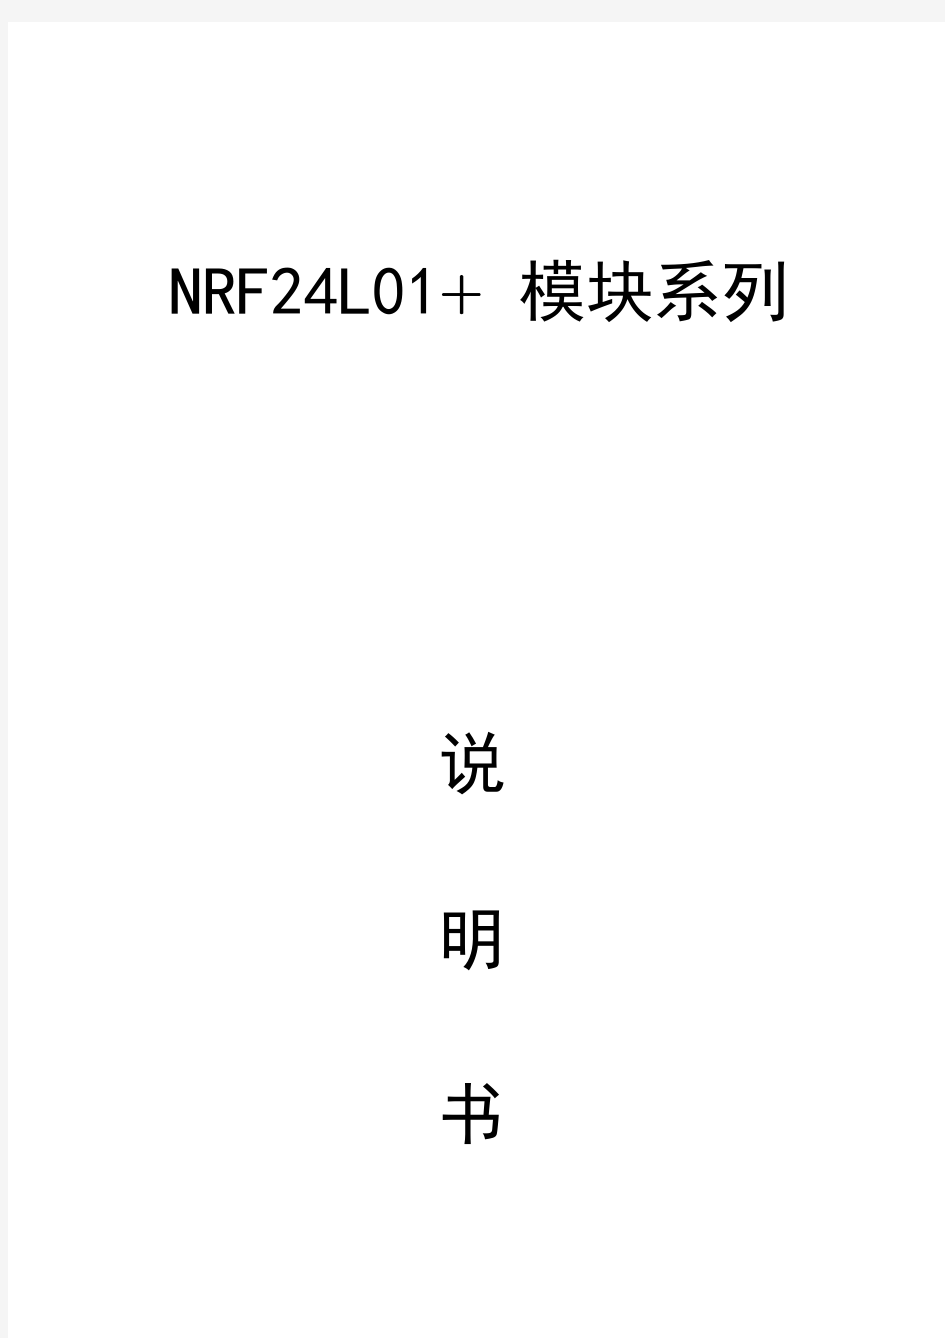 1.NRF24L01模块使用说明